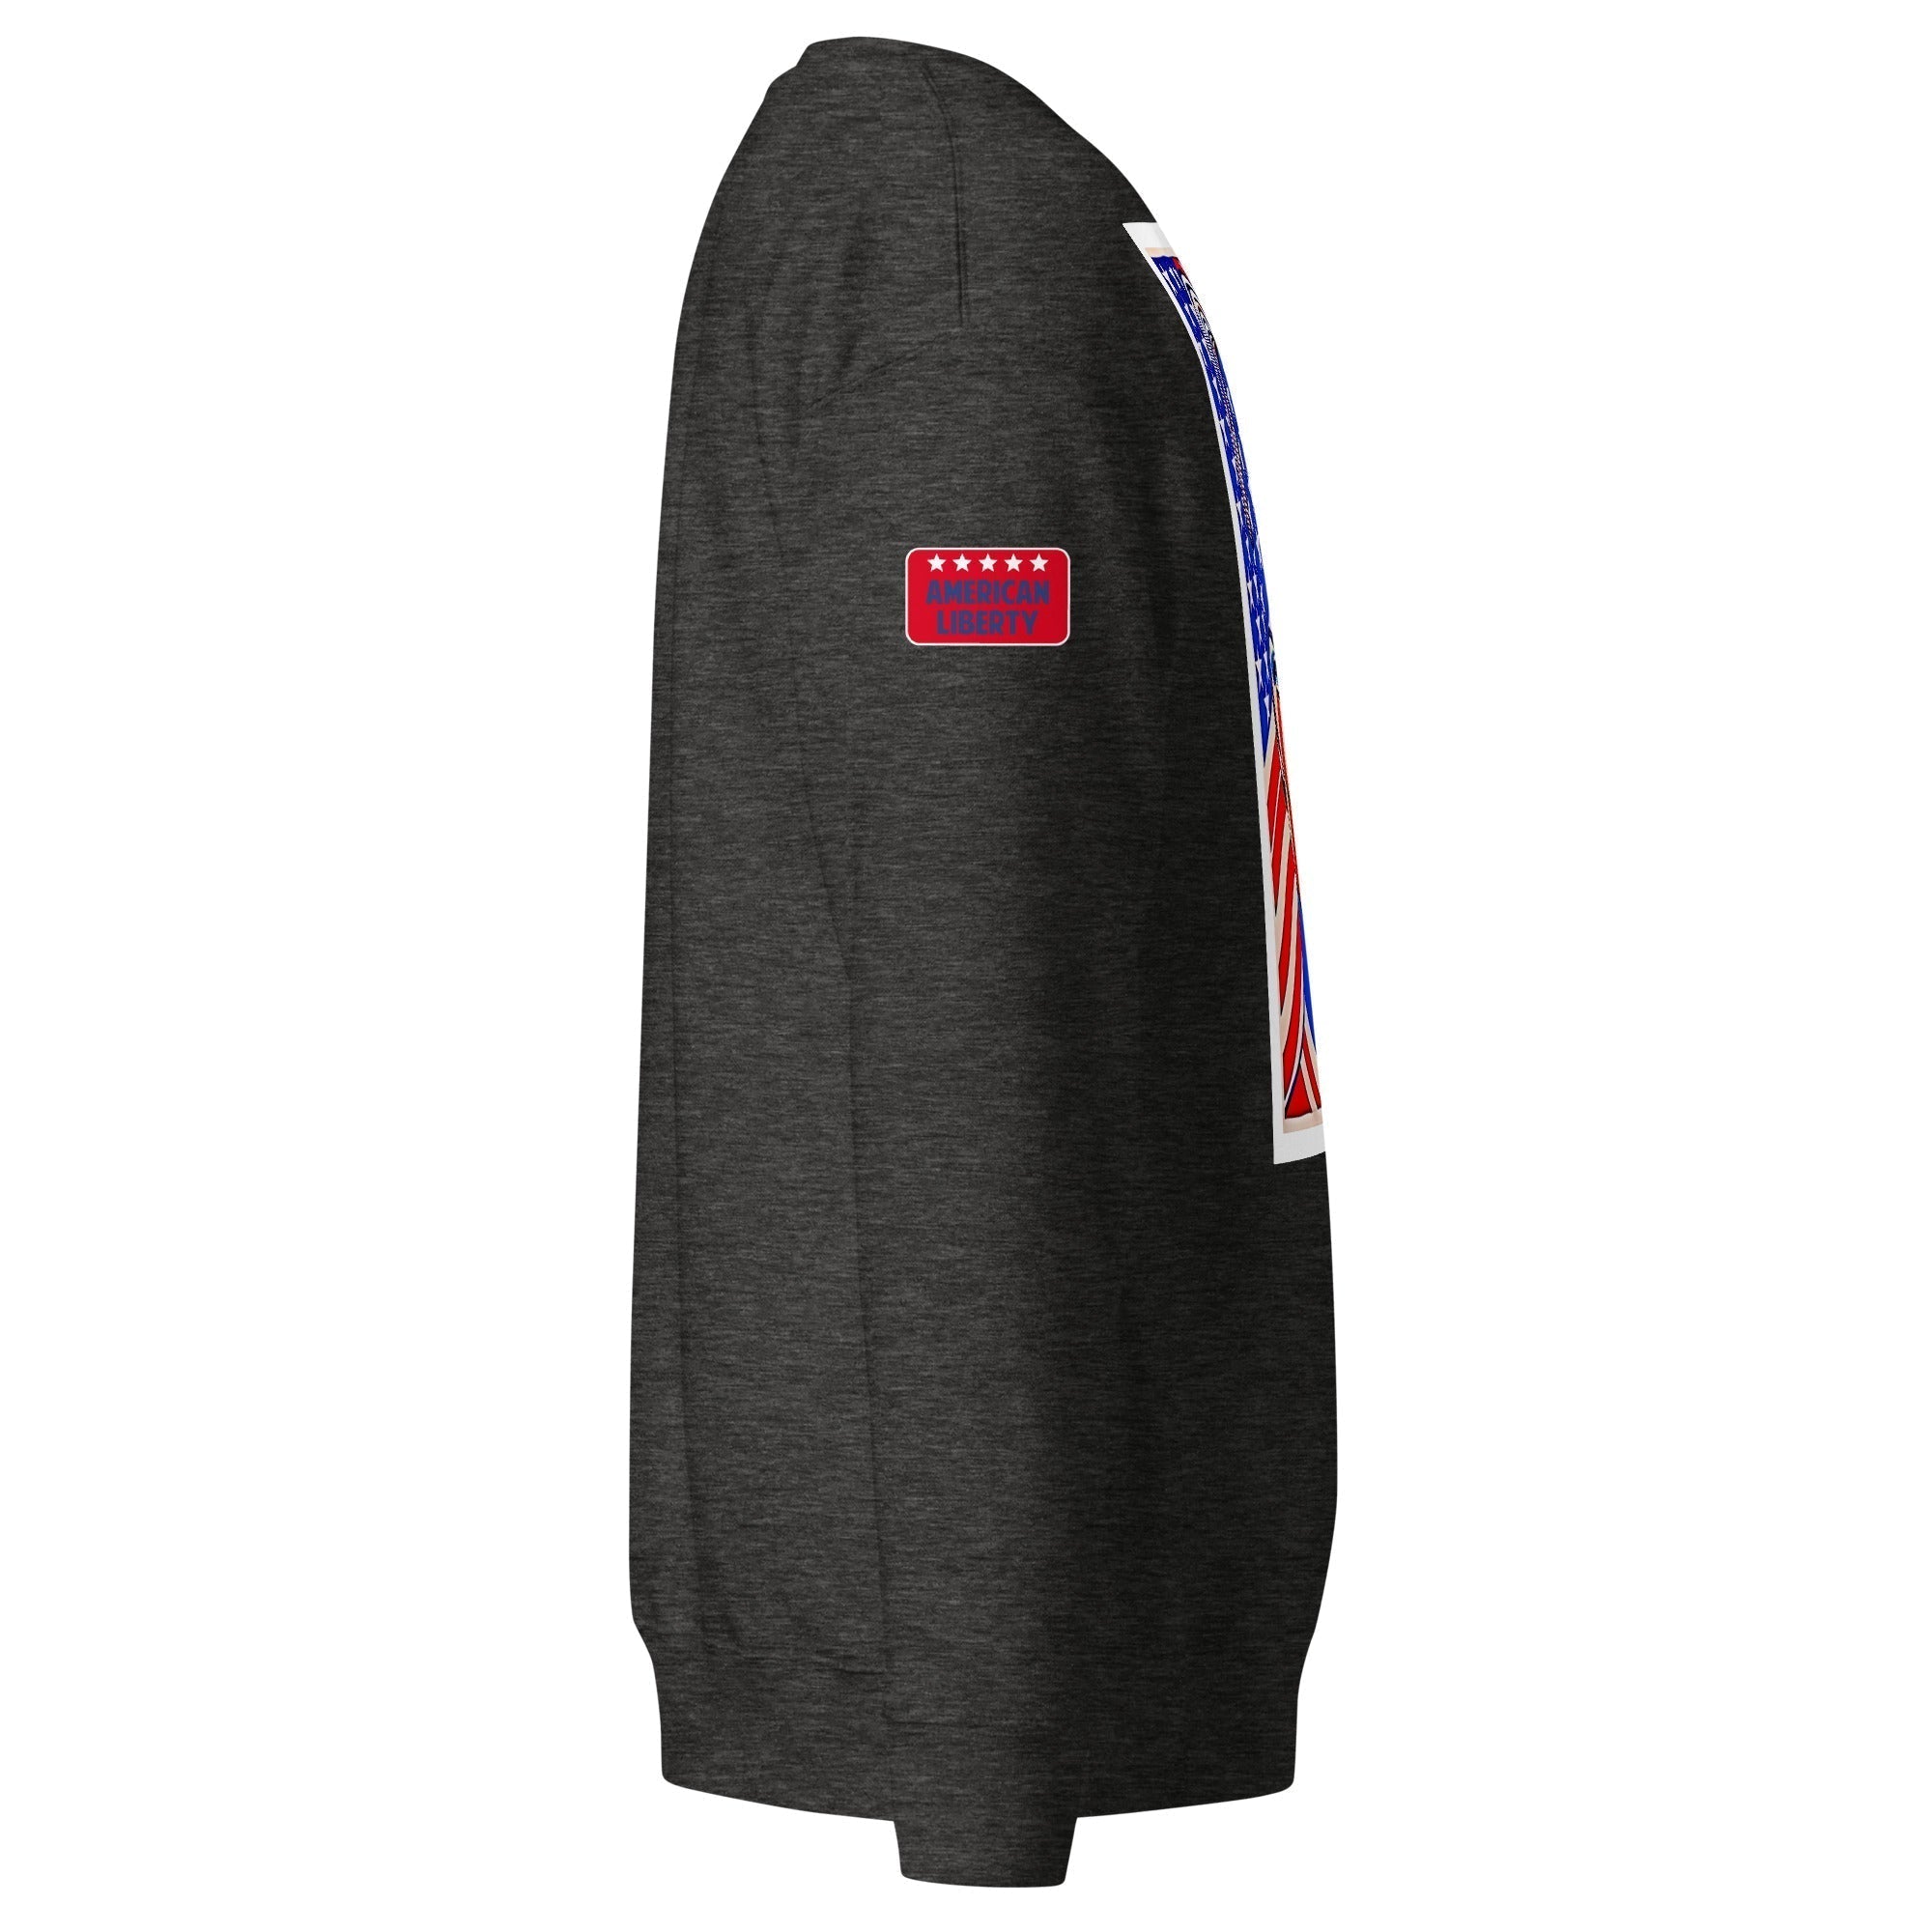 Unisex Premium Sweatshirt - American Liberty Series v.13 - GRAPHIC T-SHIRTS